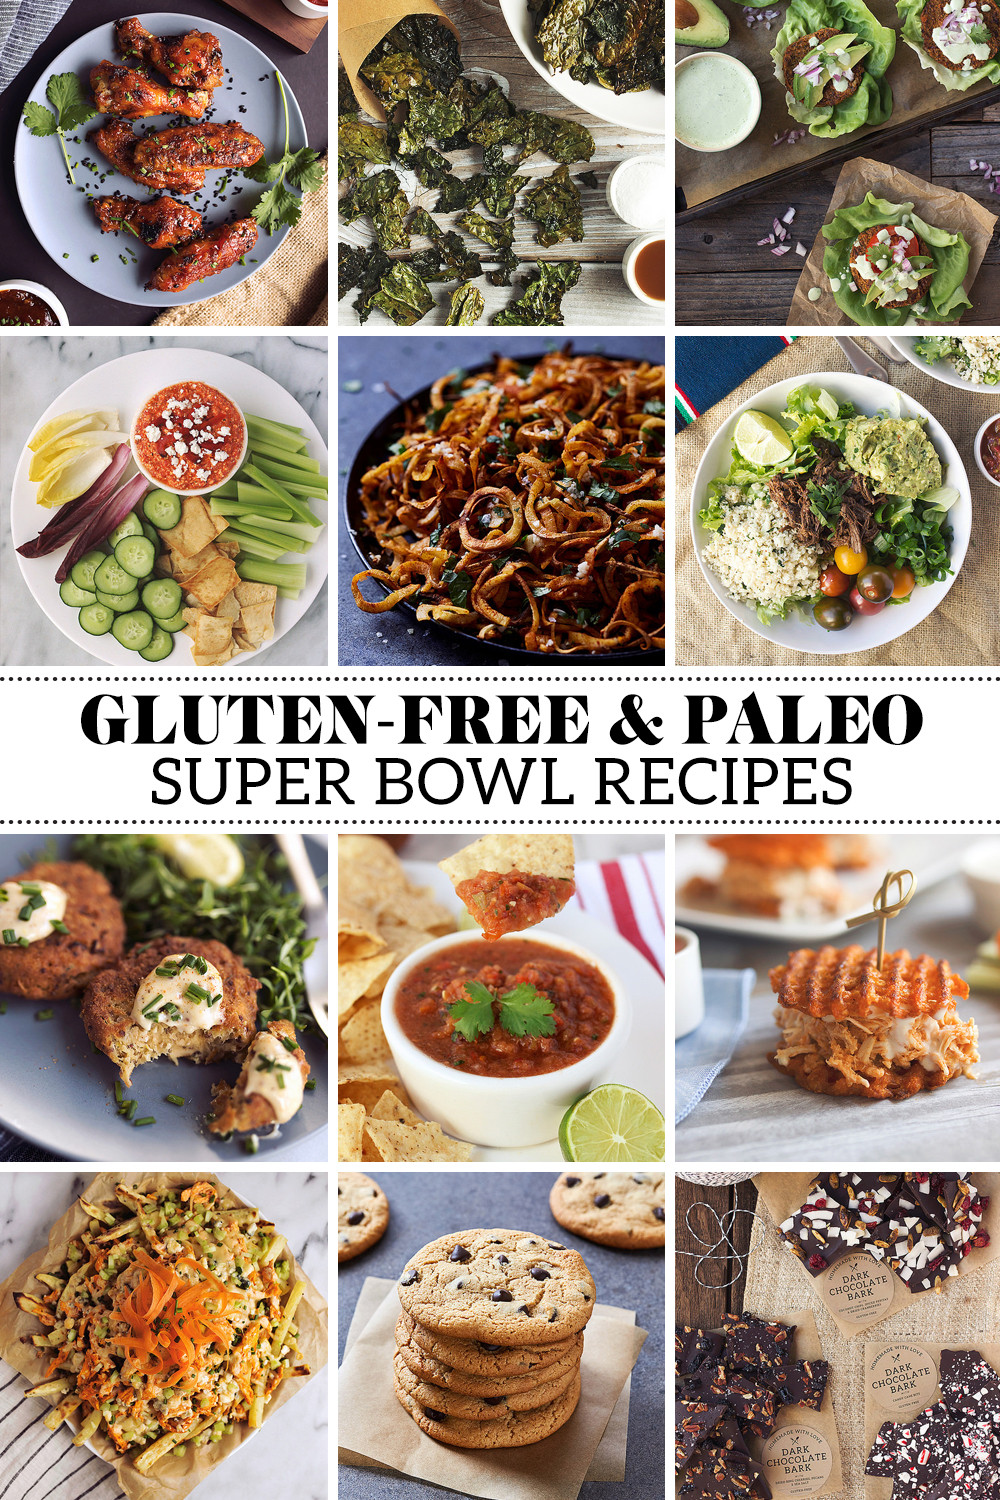 Tasty Super Bowl Recipes
 Gluten free and Paleo Super Bowl Recipes Tasty Yummies